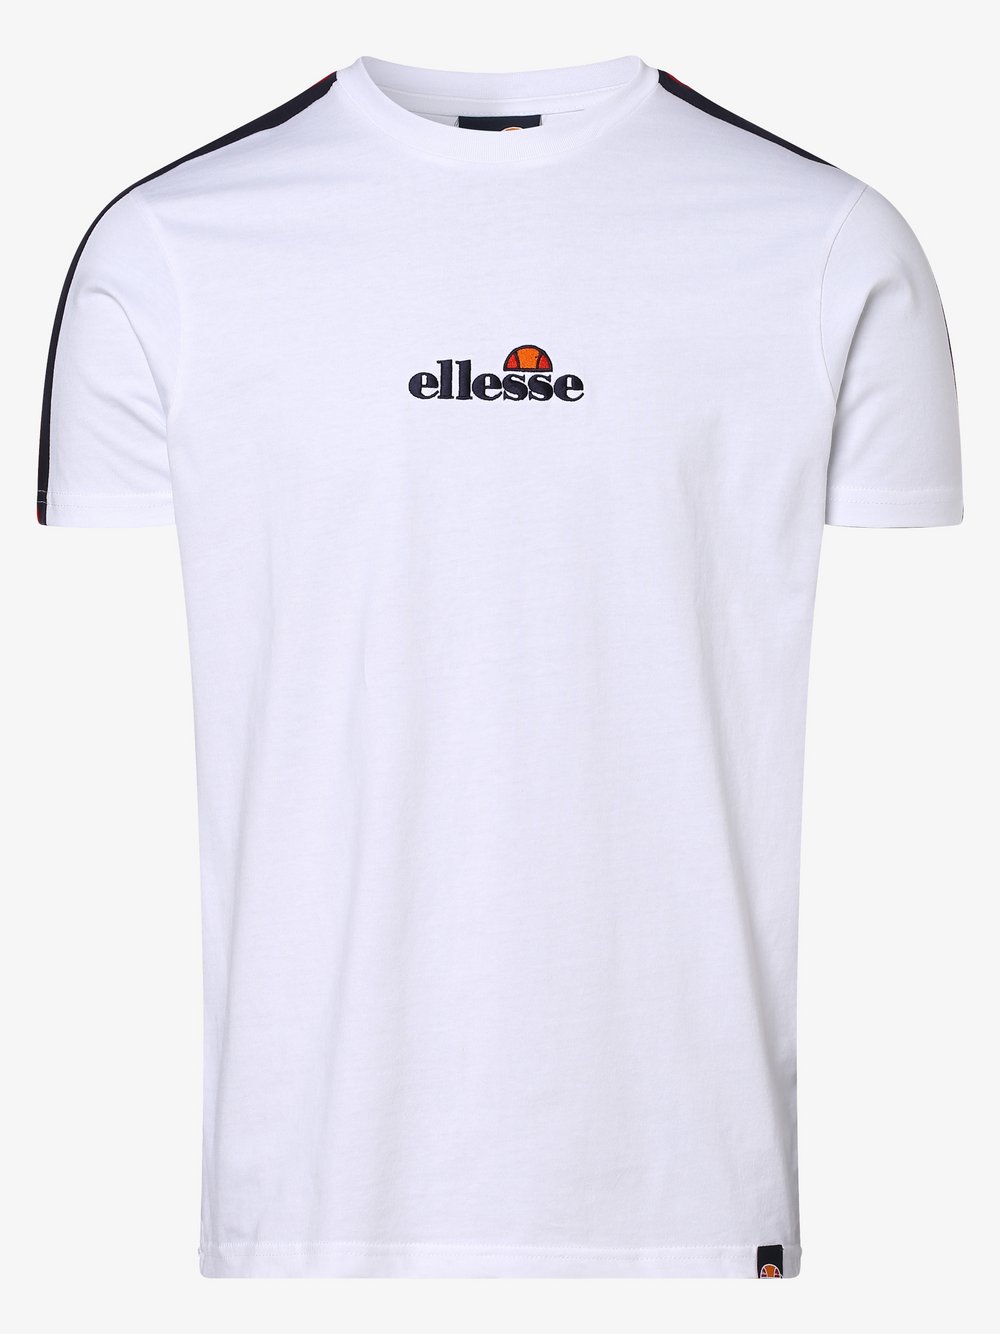 ellesse - T-shirt męski – Carcano, biały